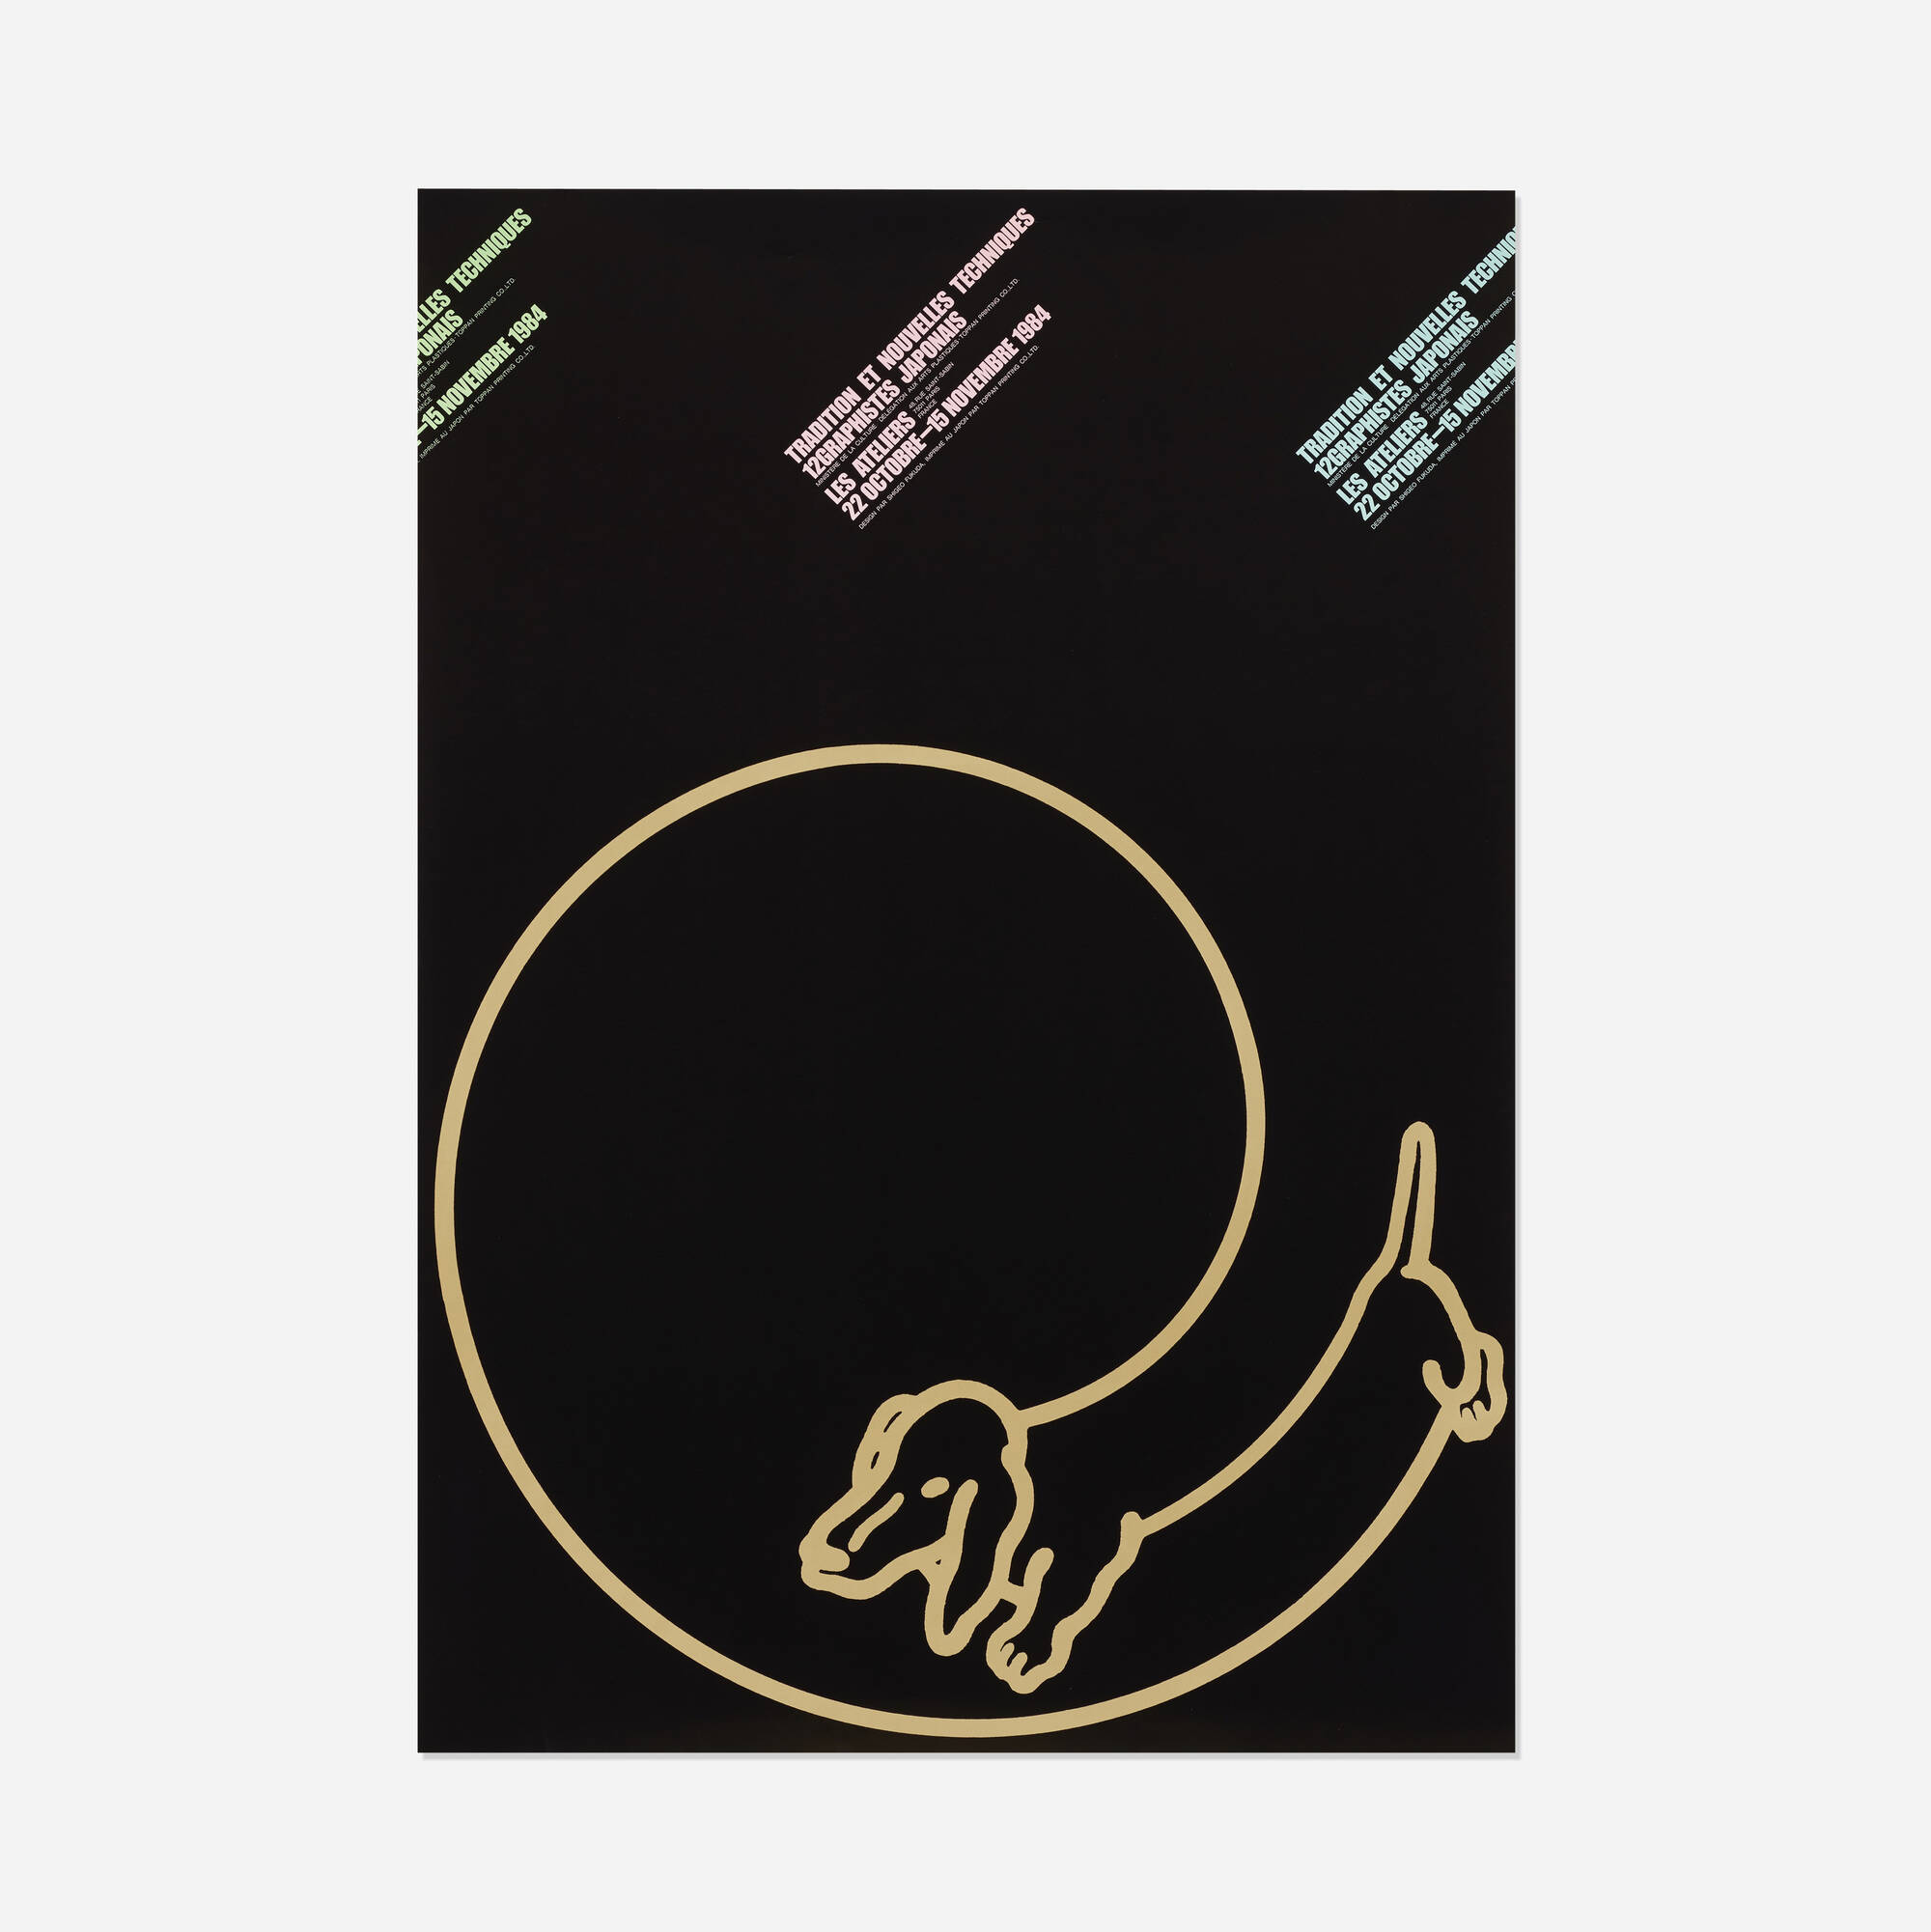 245: SHIGEO FUKUDA, 12 Graphistes Japonais poster < Paul Rand: The 